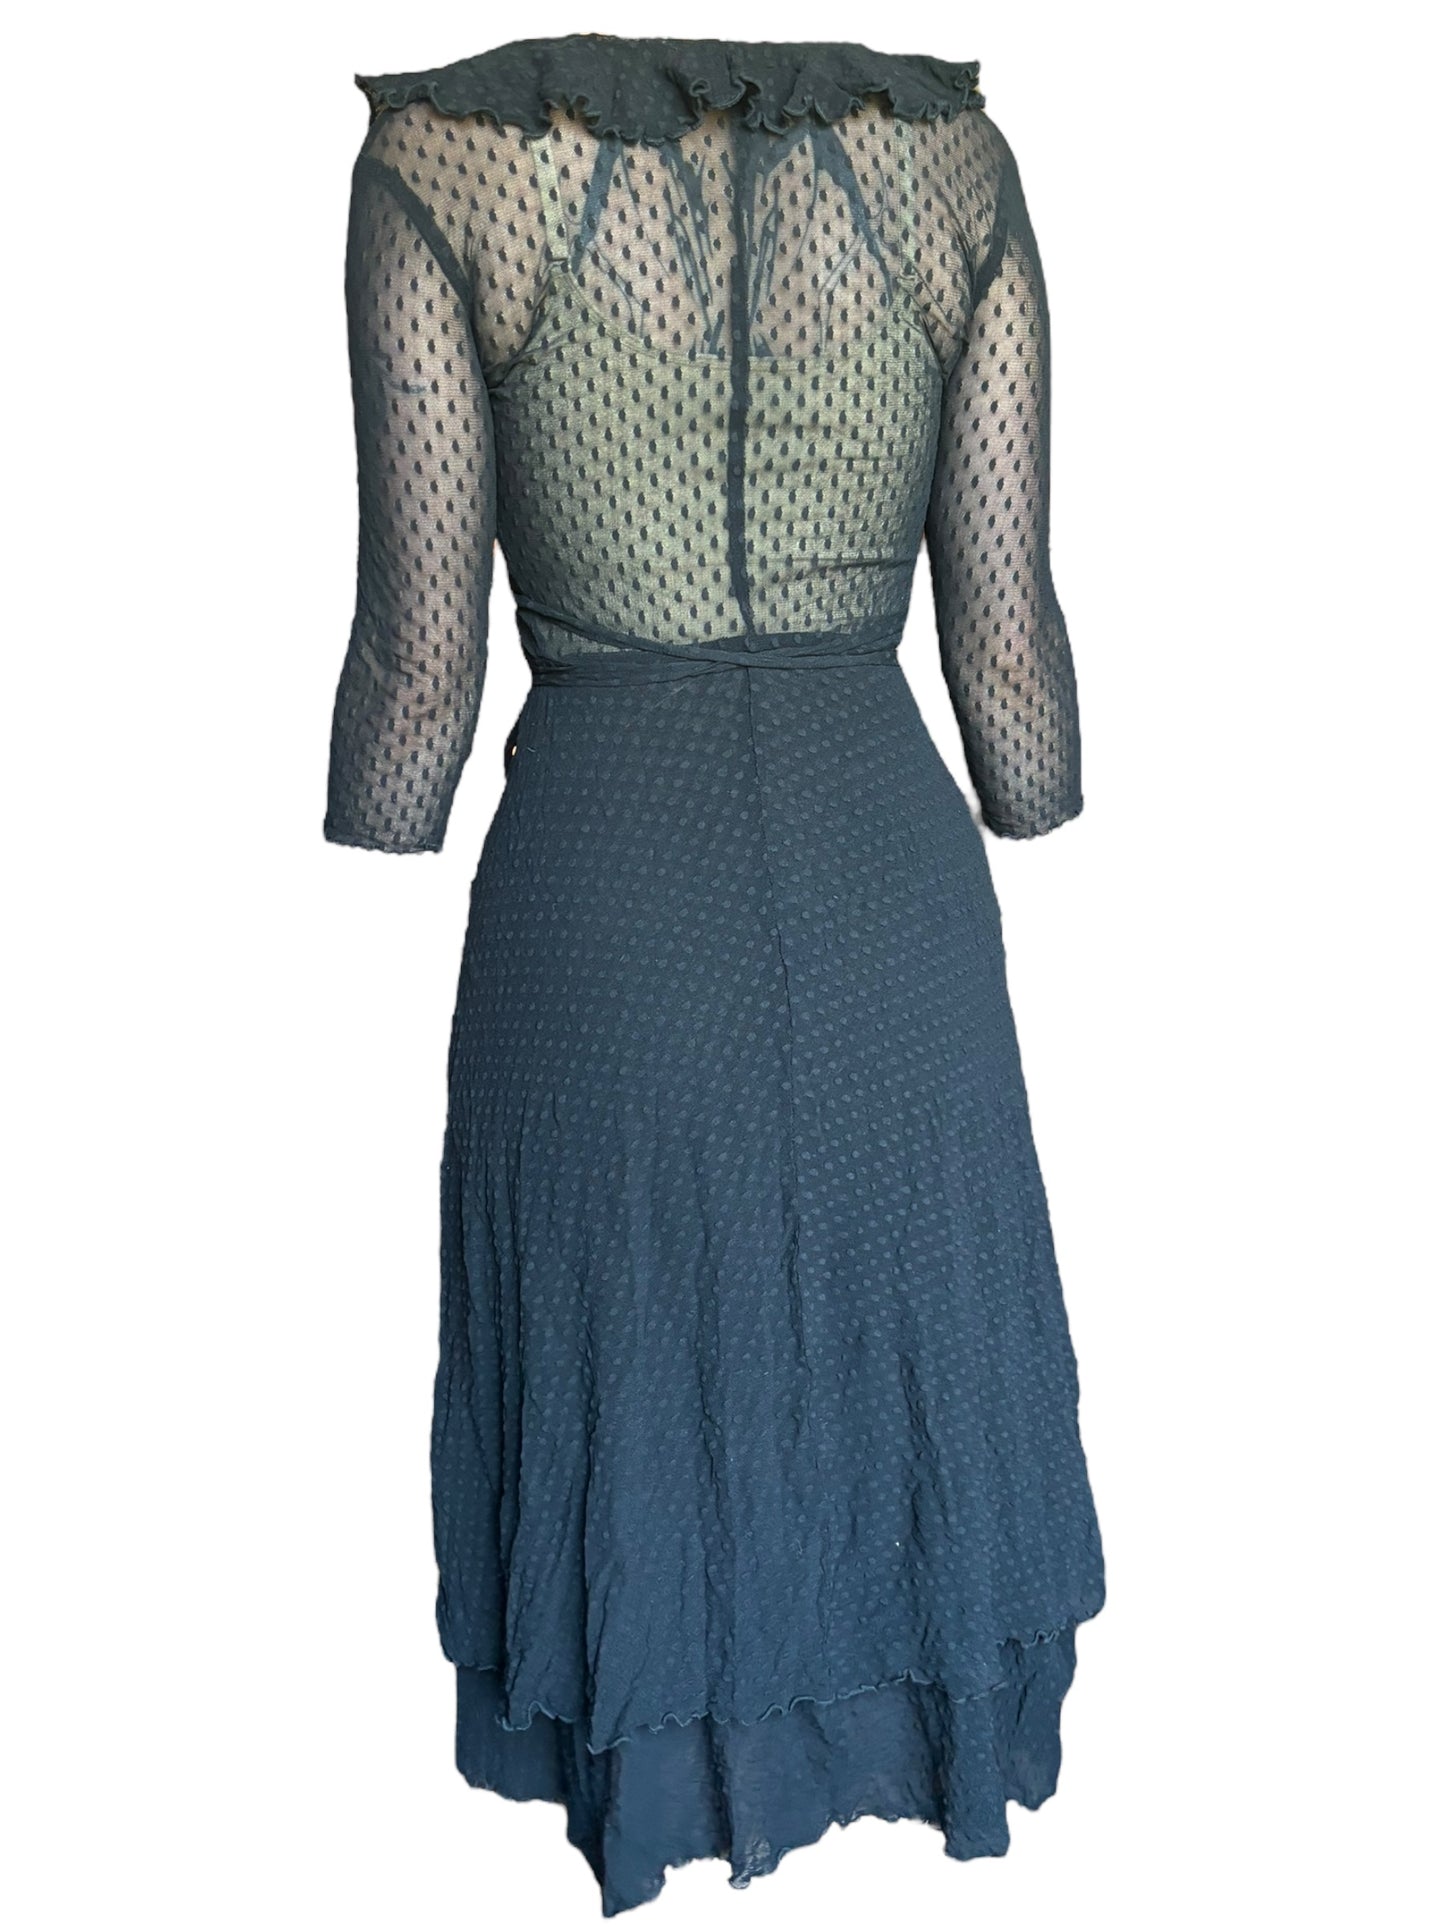 Vintage Betsey Johnson Black Lace Wrap Dress - M